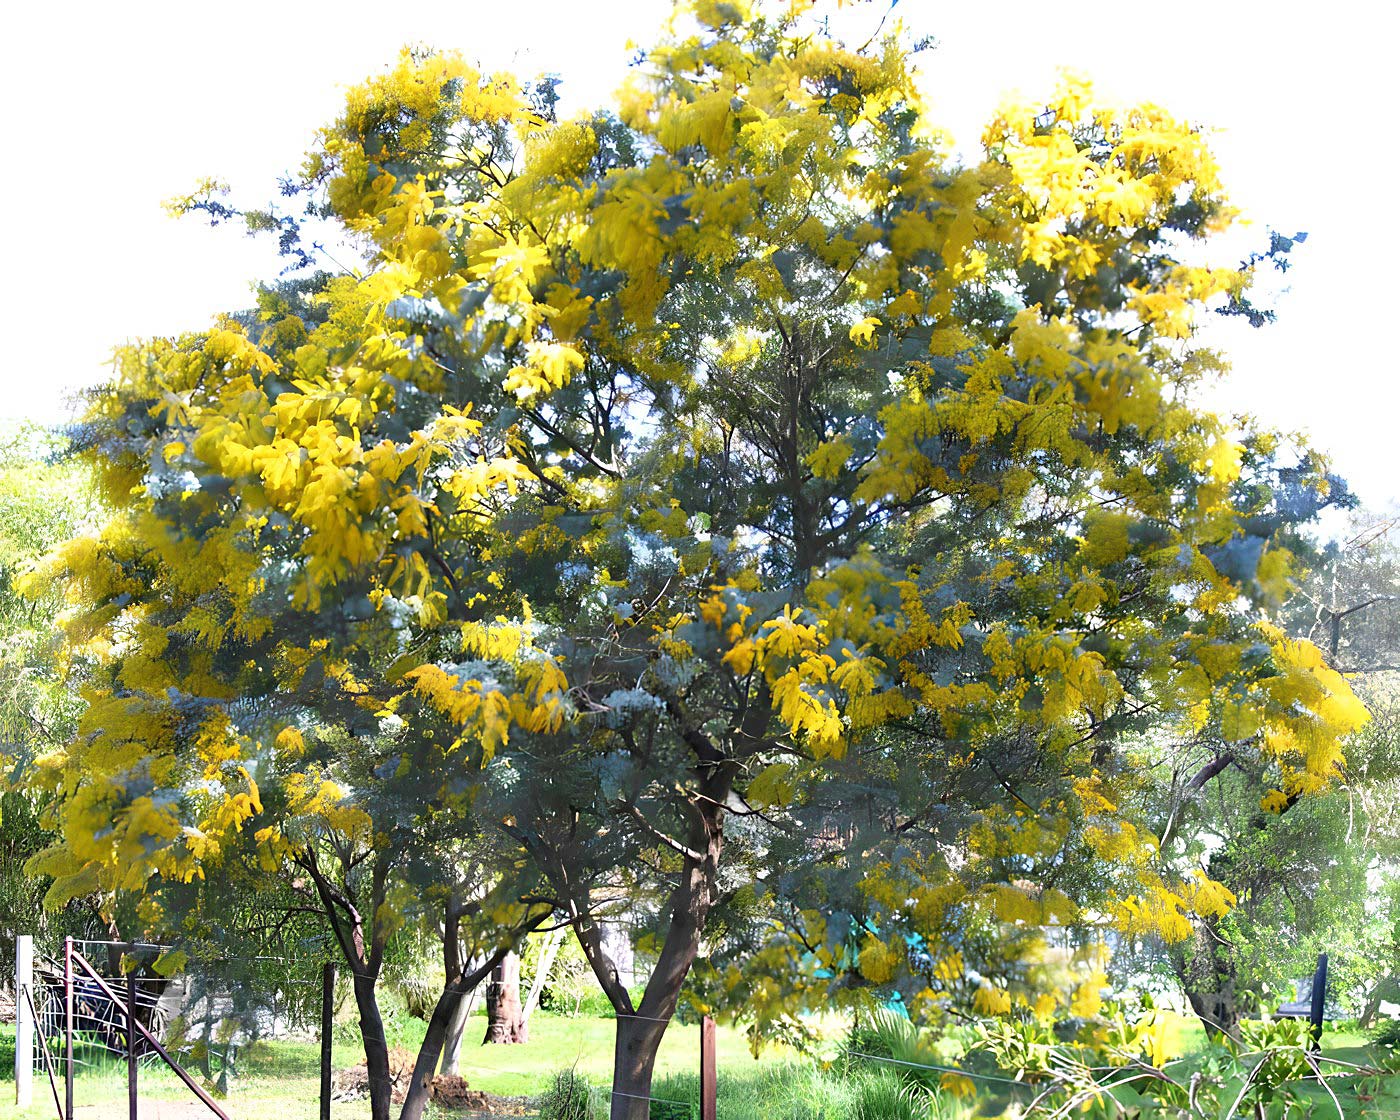 Cootamundra Wattle in full bloom, acaia baileyana